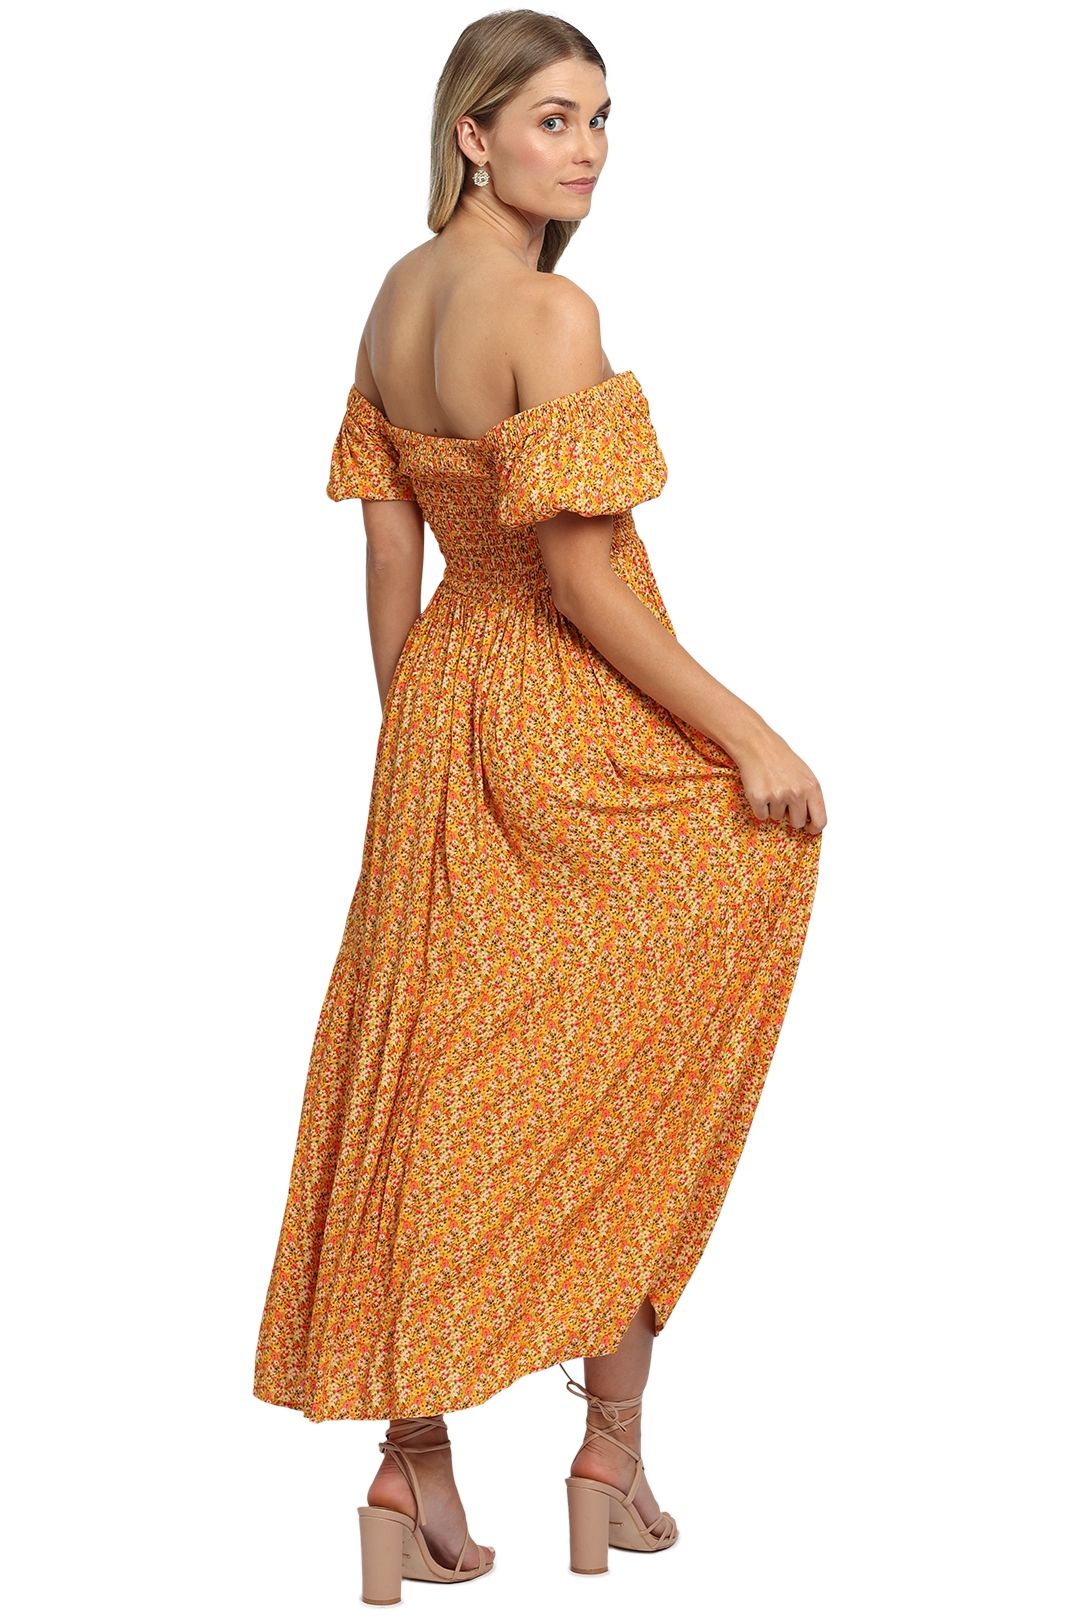 Suzie Dress in Saffron print